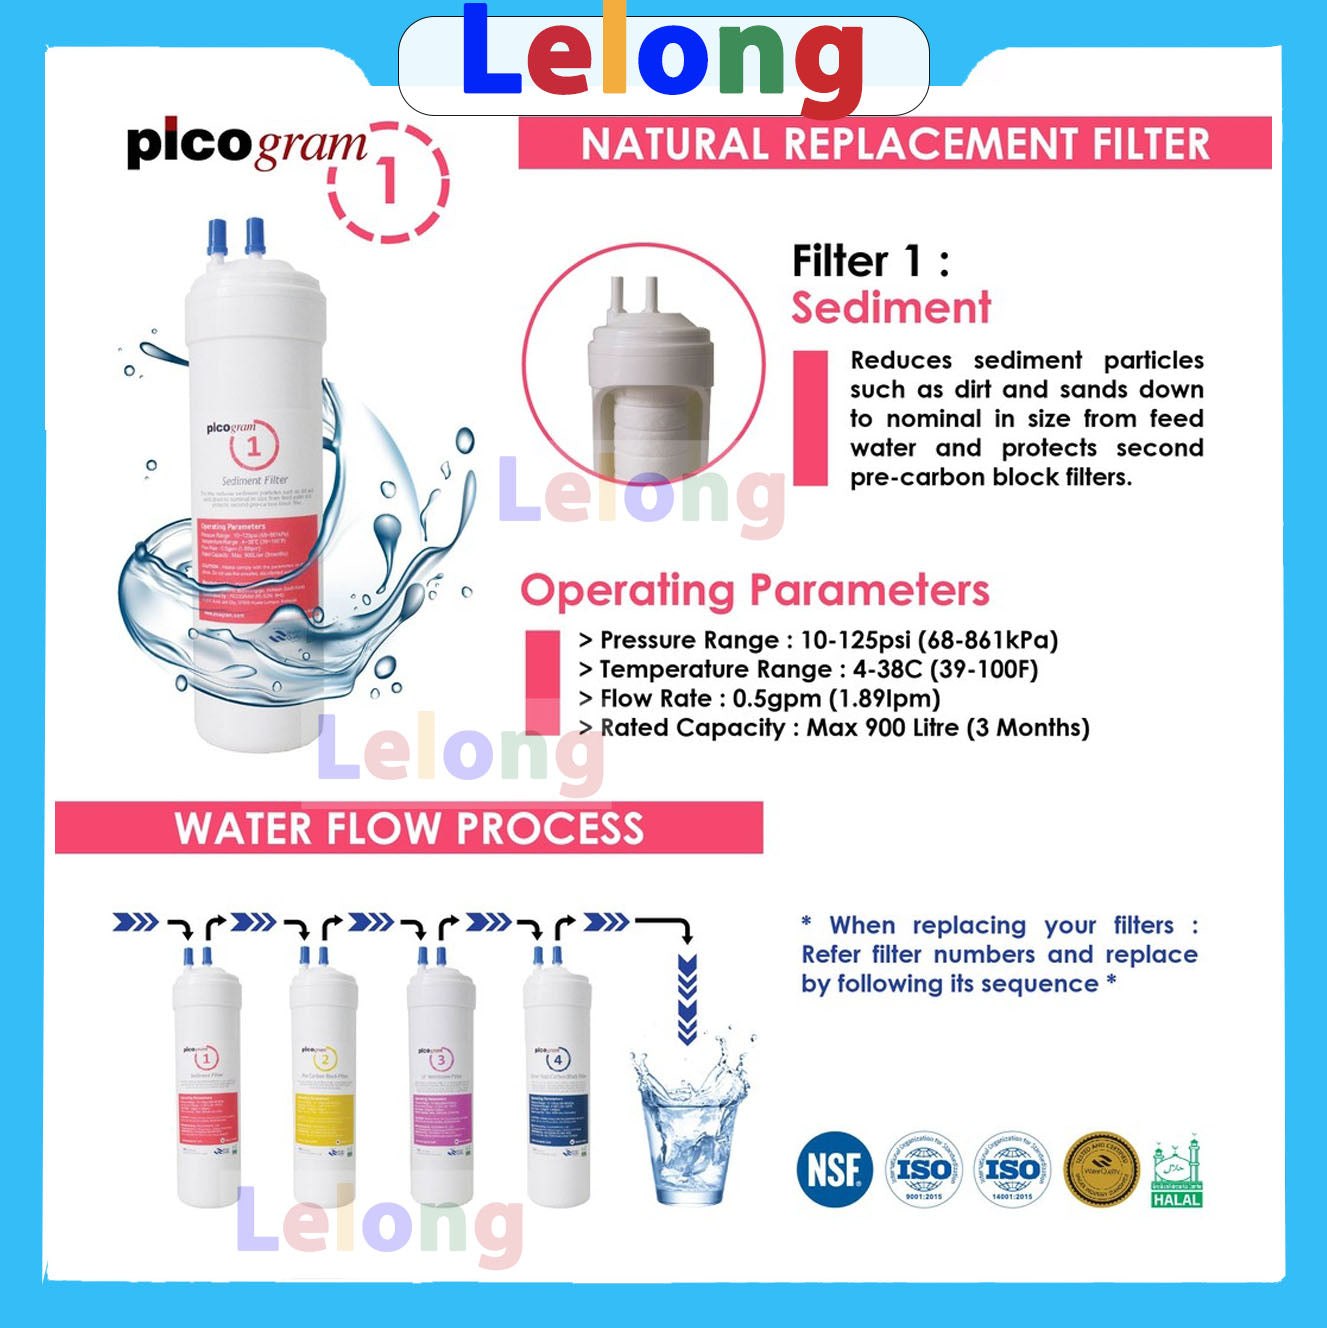 4PC UF Set , Korea Picogram Filters Cartridge for Korea Water Purifier, Coway, Cuckoo, Aox Tong Yang Magic Water Purifier Water Dispenser Water Filter